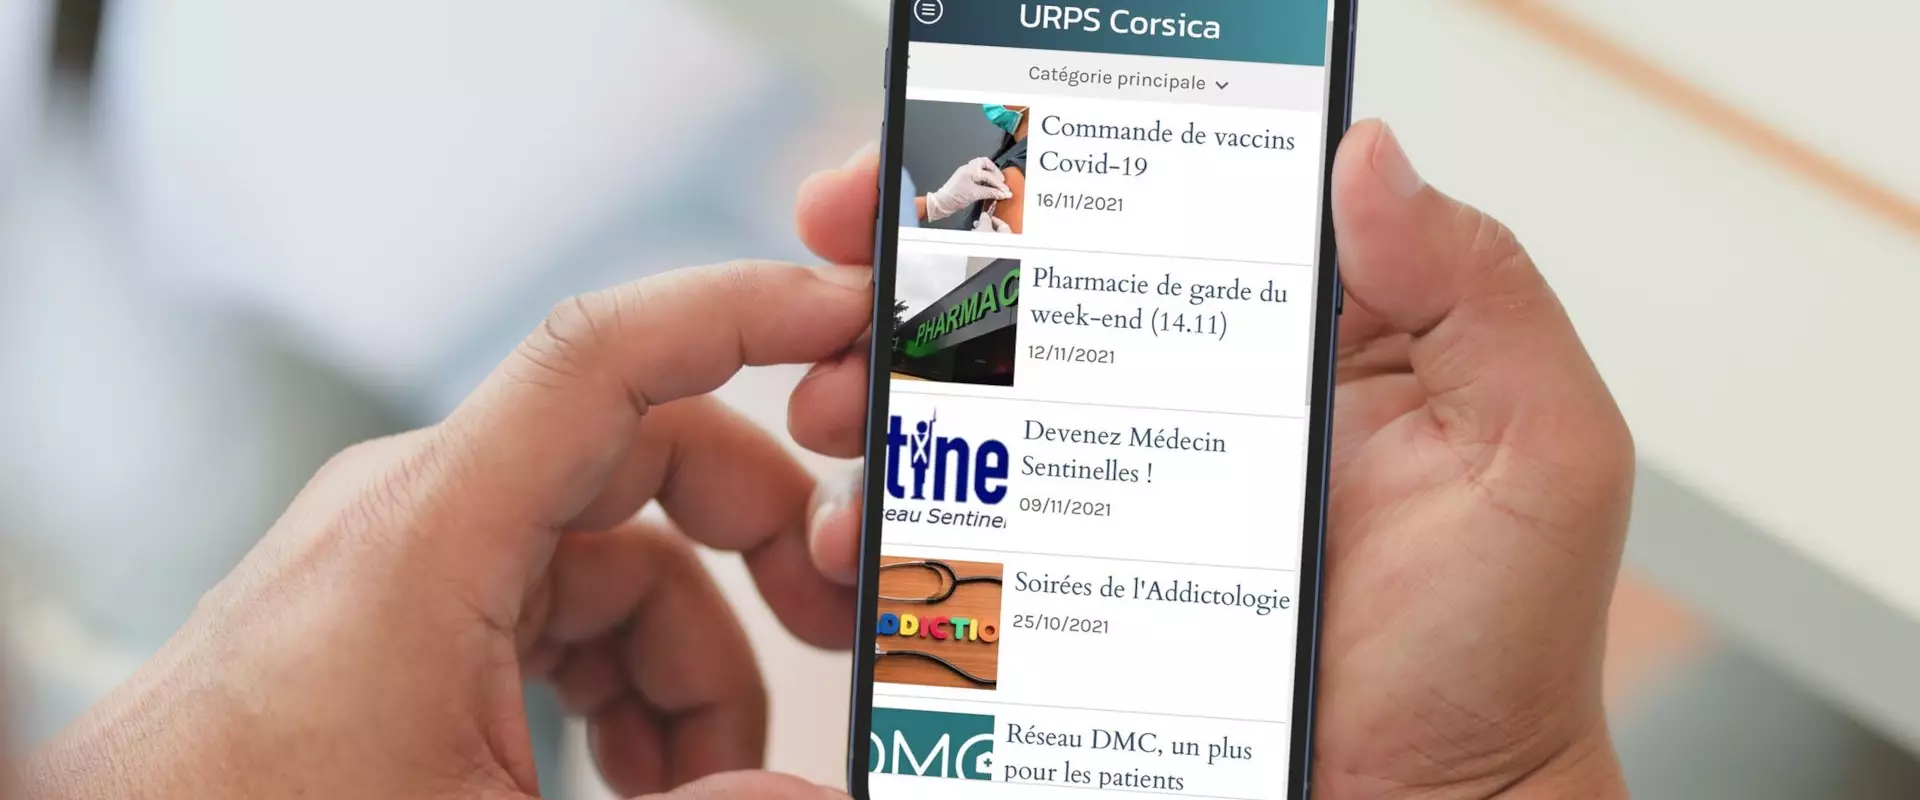 Application mobile : URPS CORSICA